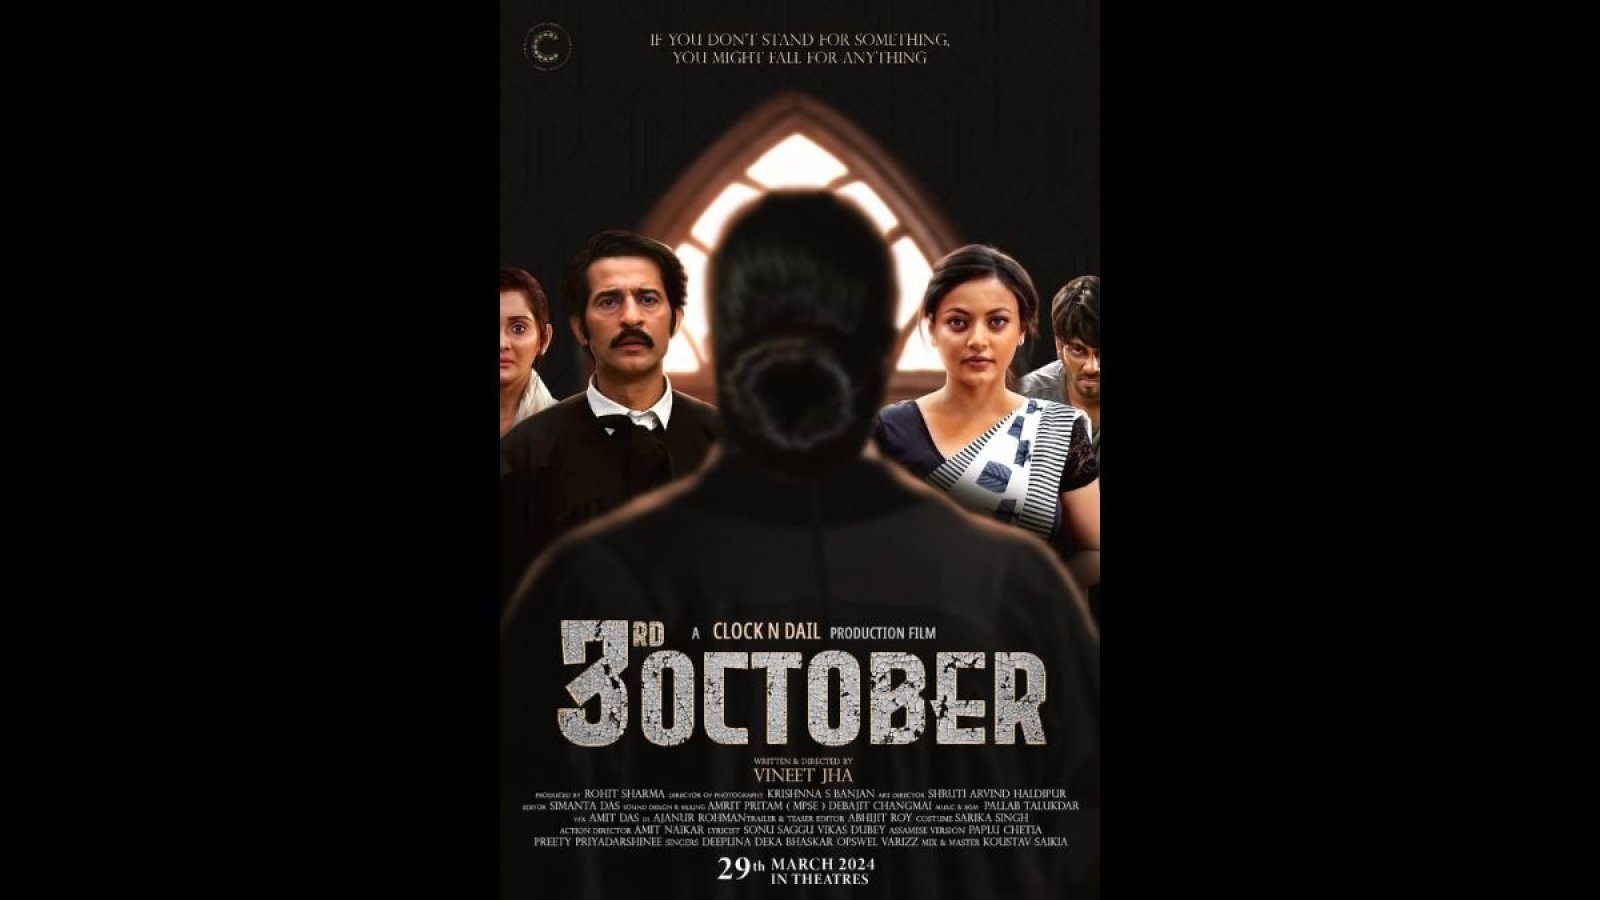 ‘3rd OCTOBER’ फिल्म समाज को आइना दिखाने का काम करेगी